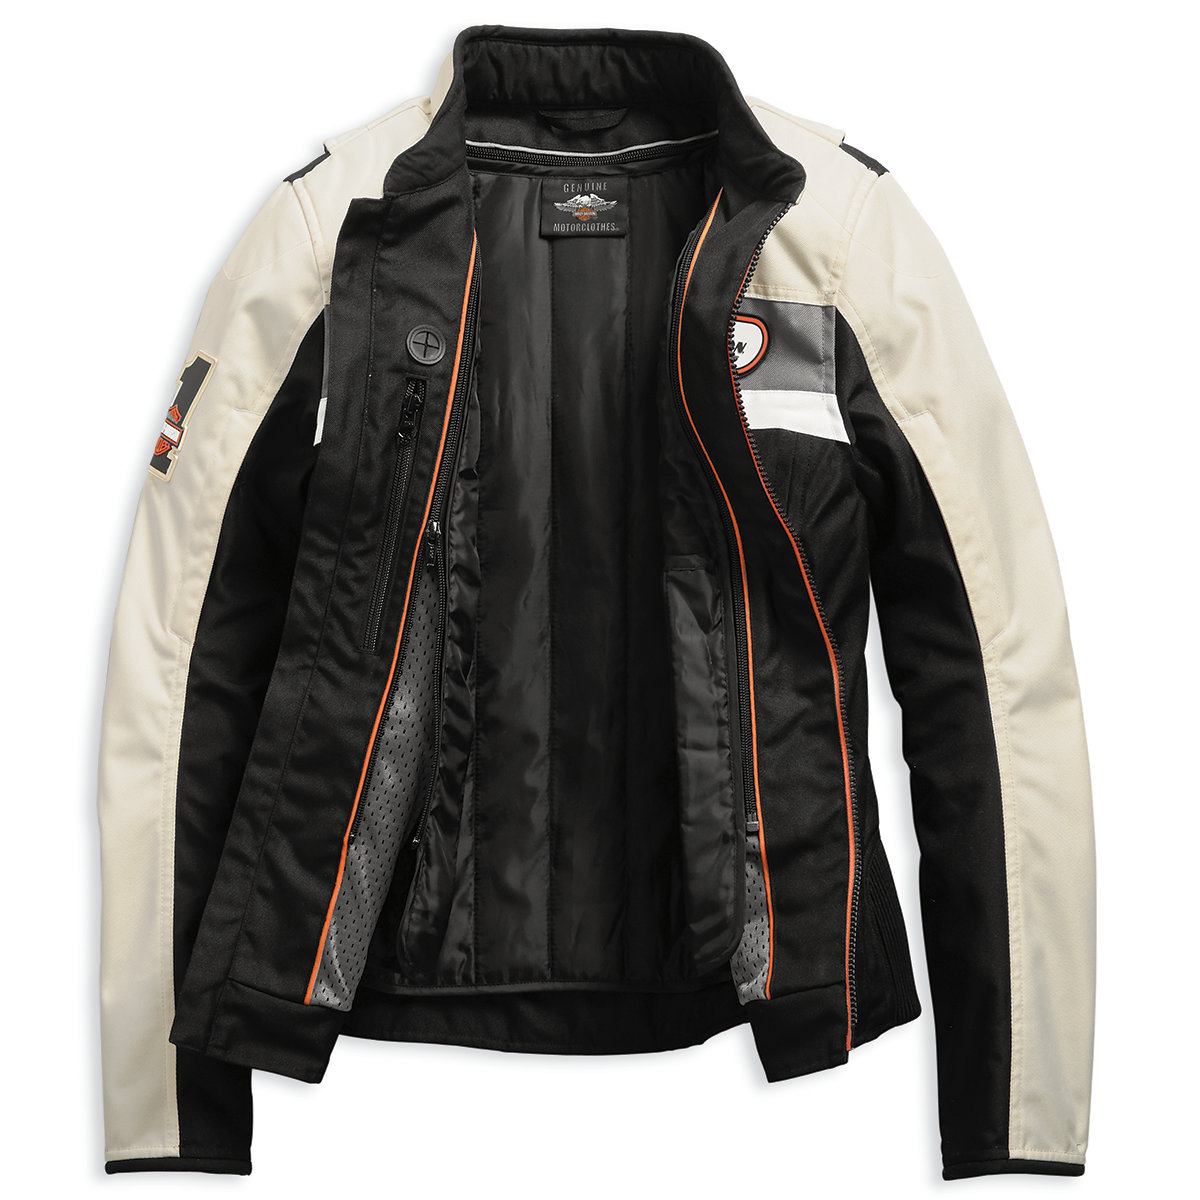 Harley-Davidson Women's Fennimore Riding Jacket